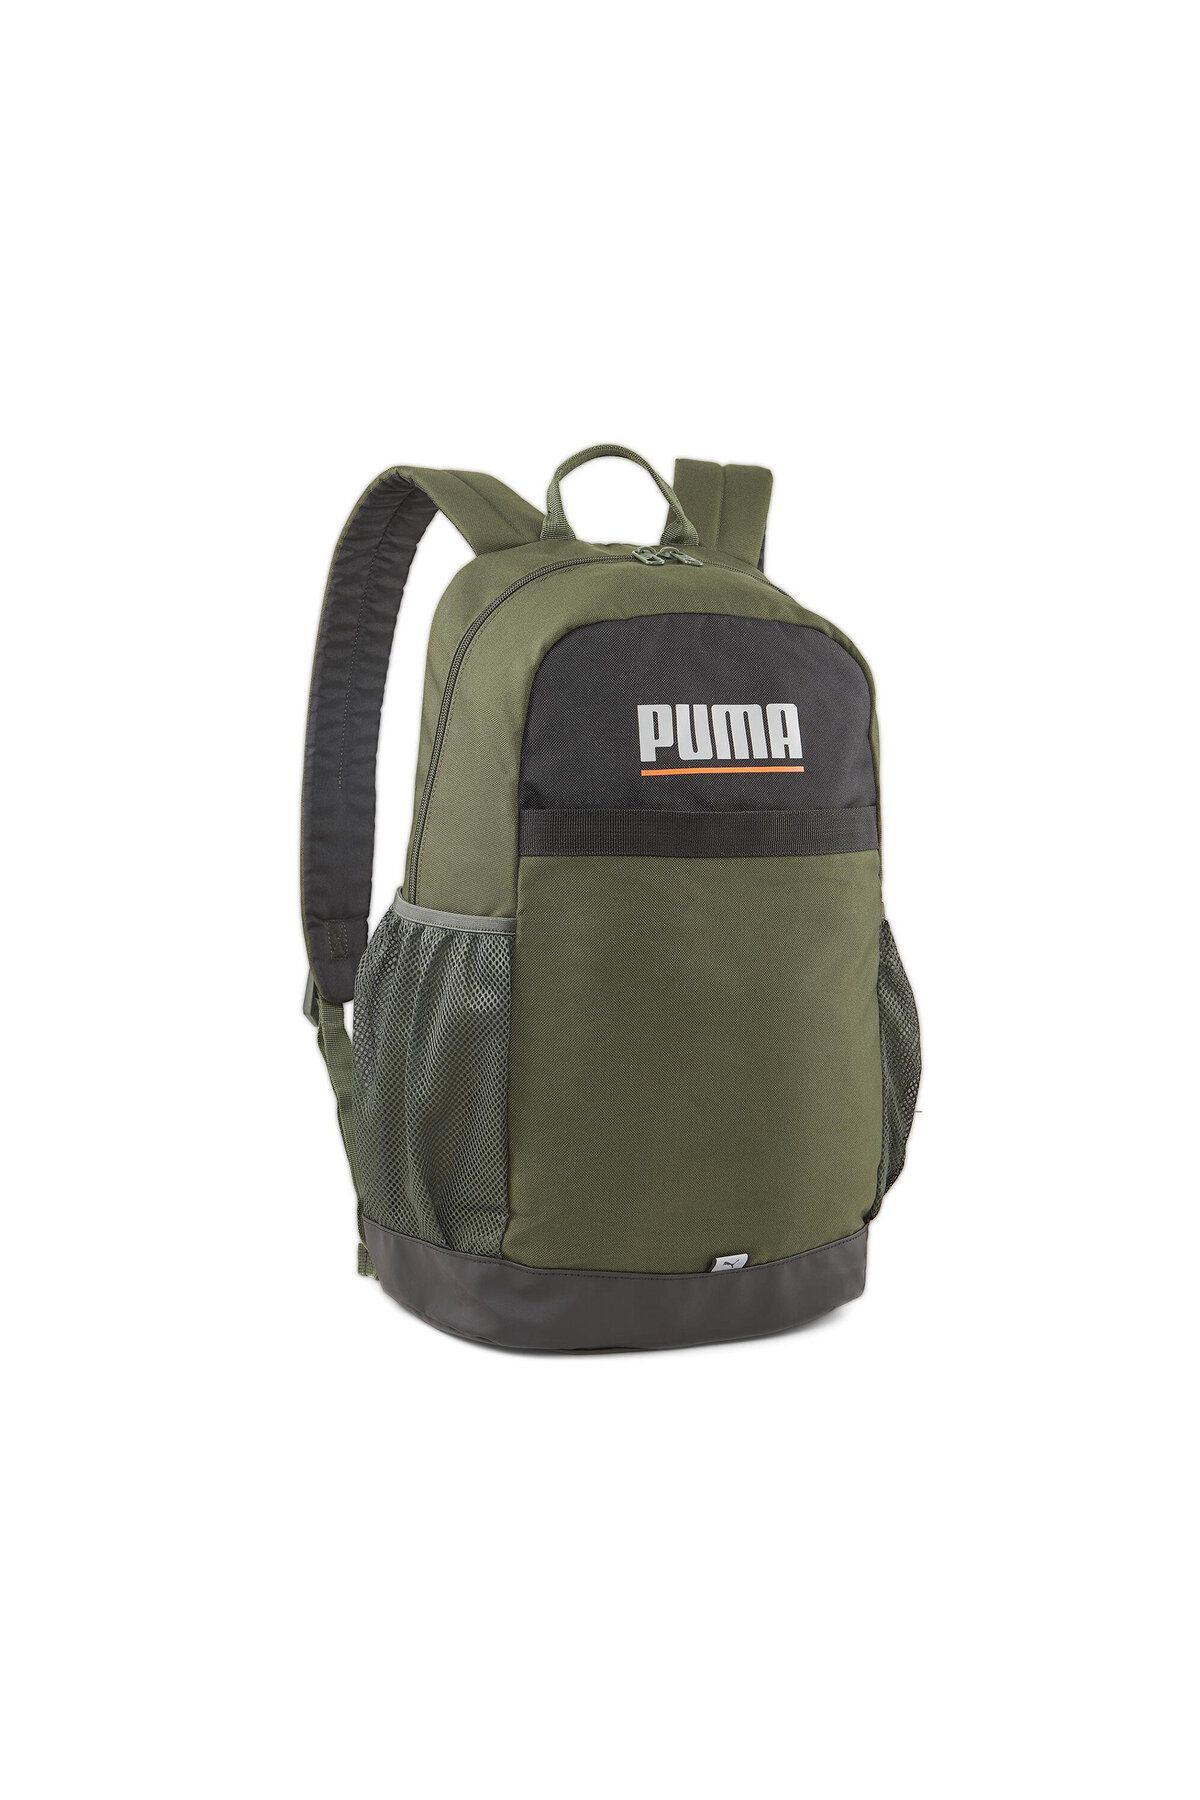 Puma Plus Backpack Sırt Çantası 7961507 Haki